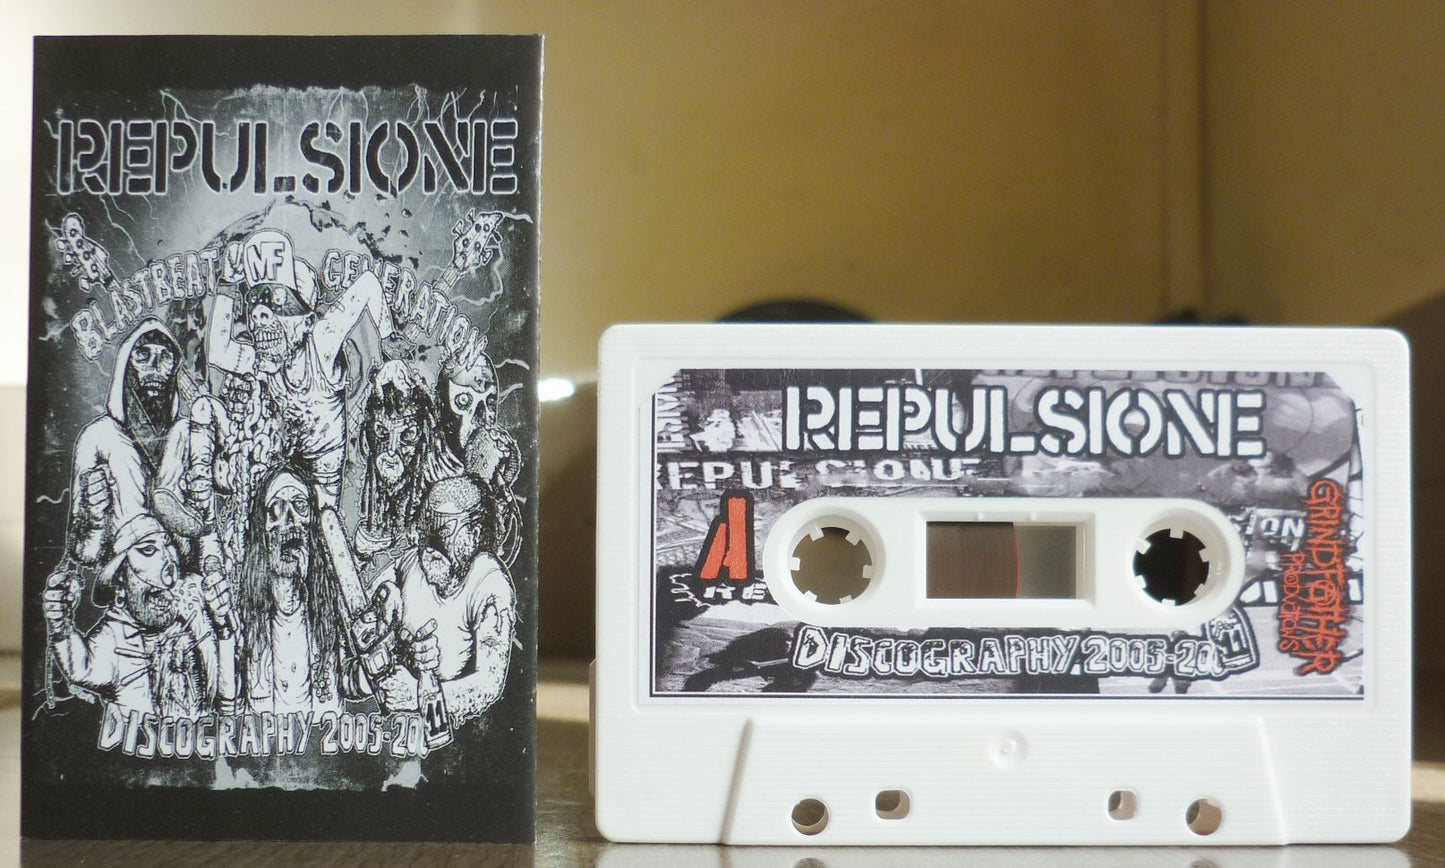 REPULSIONE - Discography 2005-2011 Tape